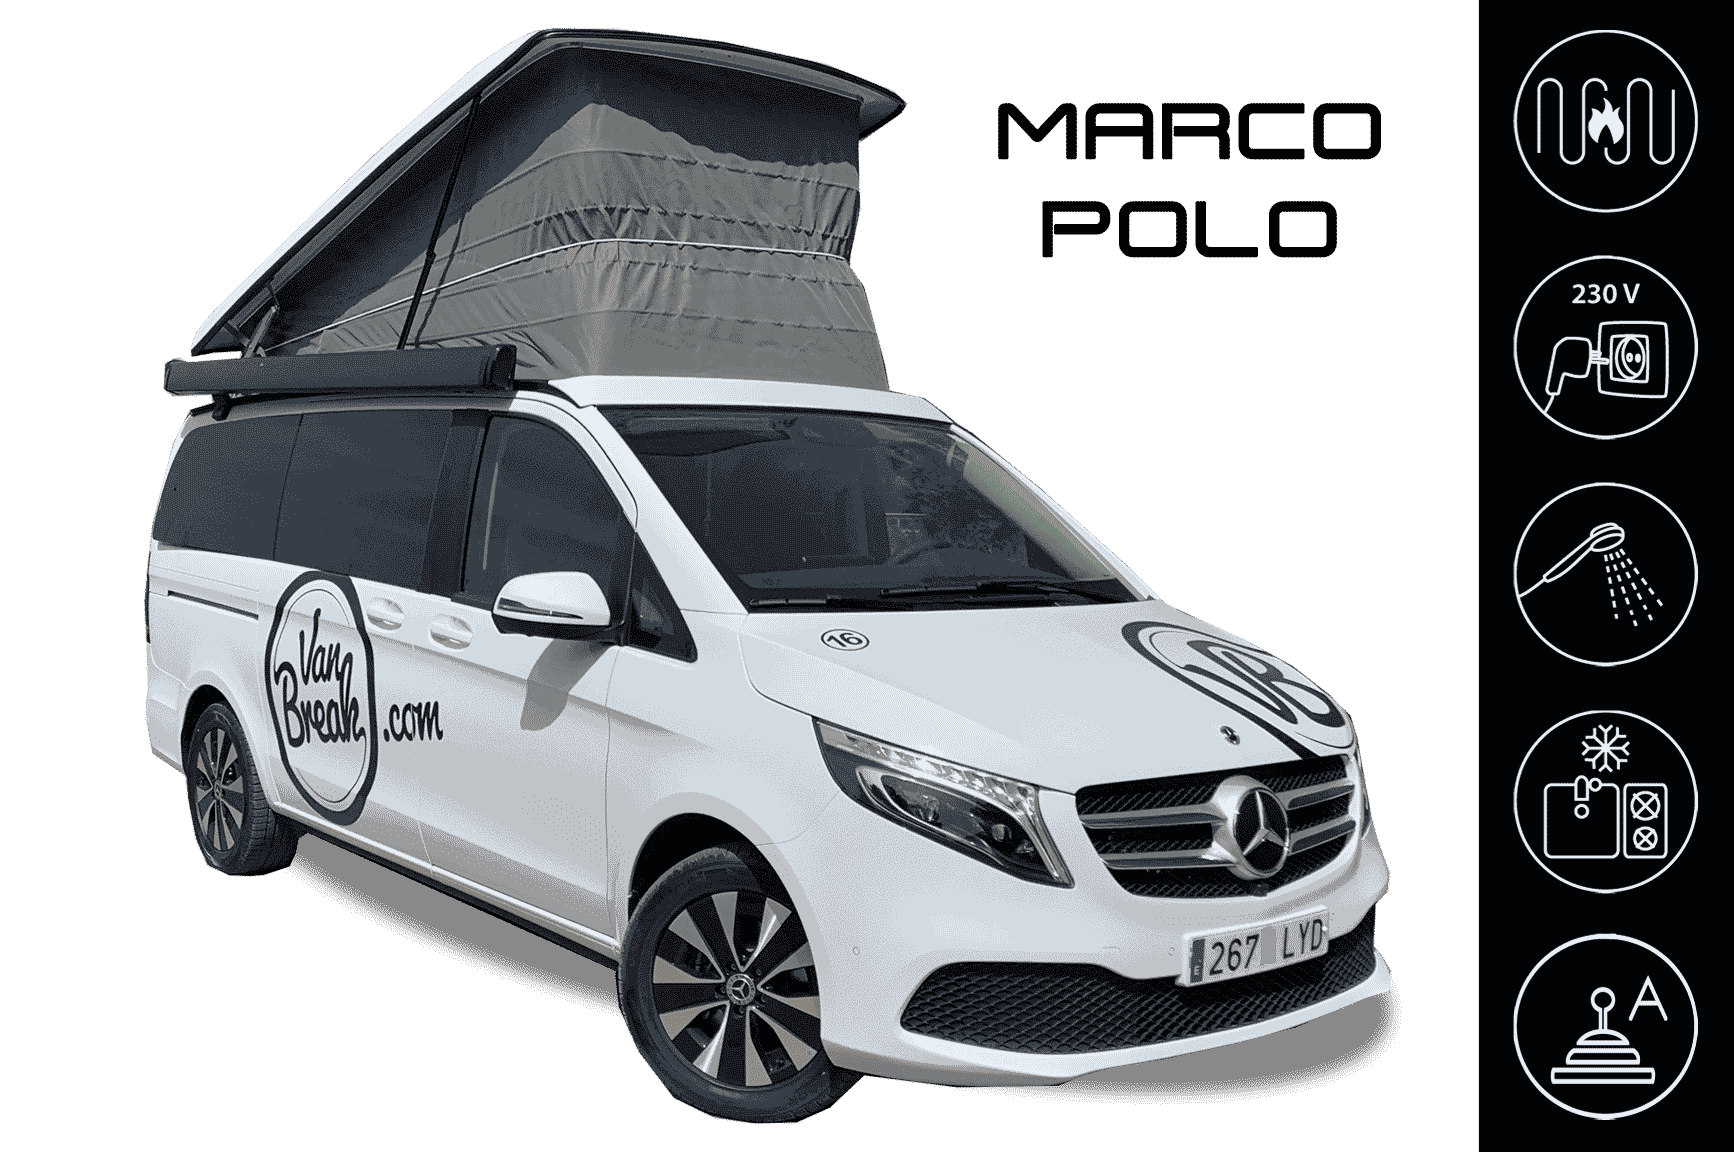 Vanbreak - Location Mercedes Marco Polo Espagne